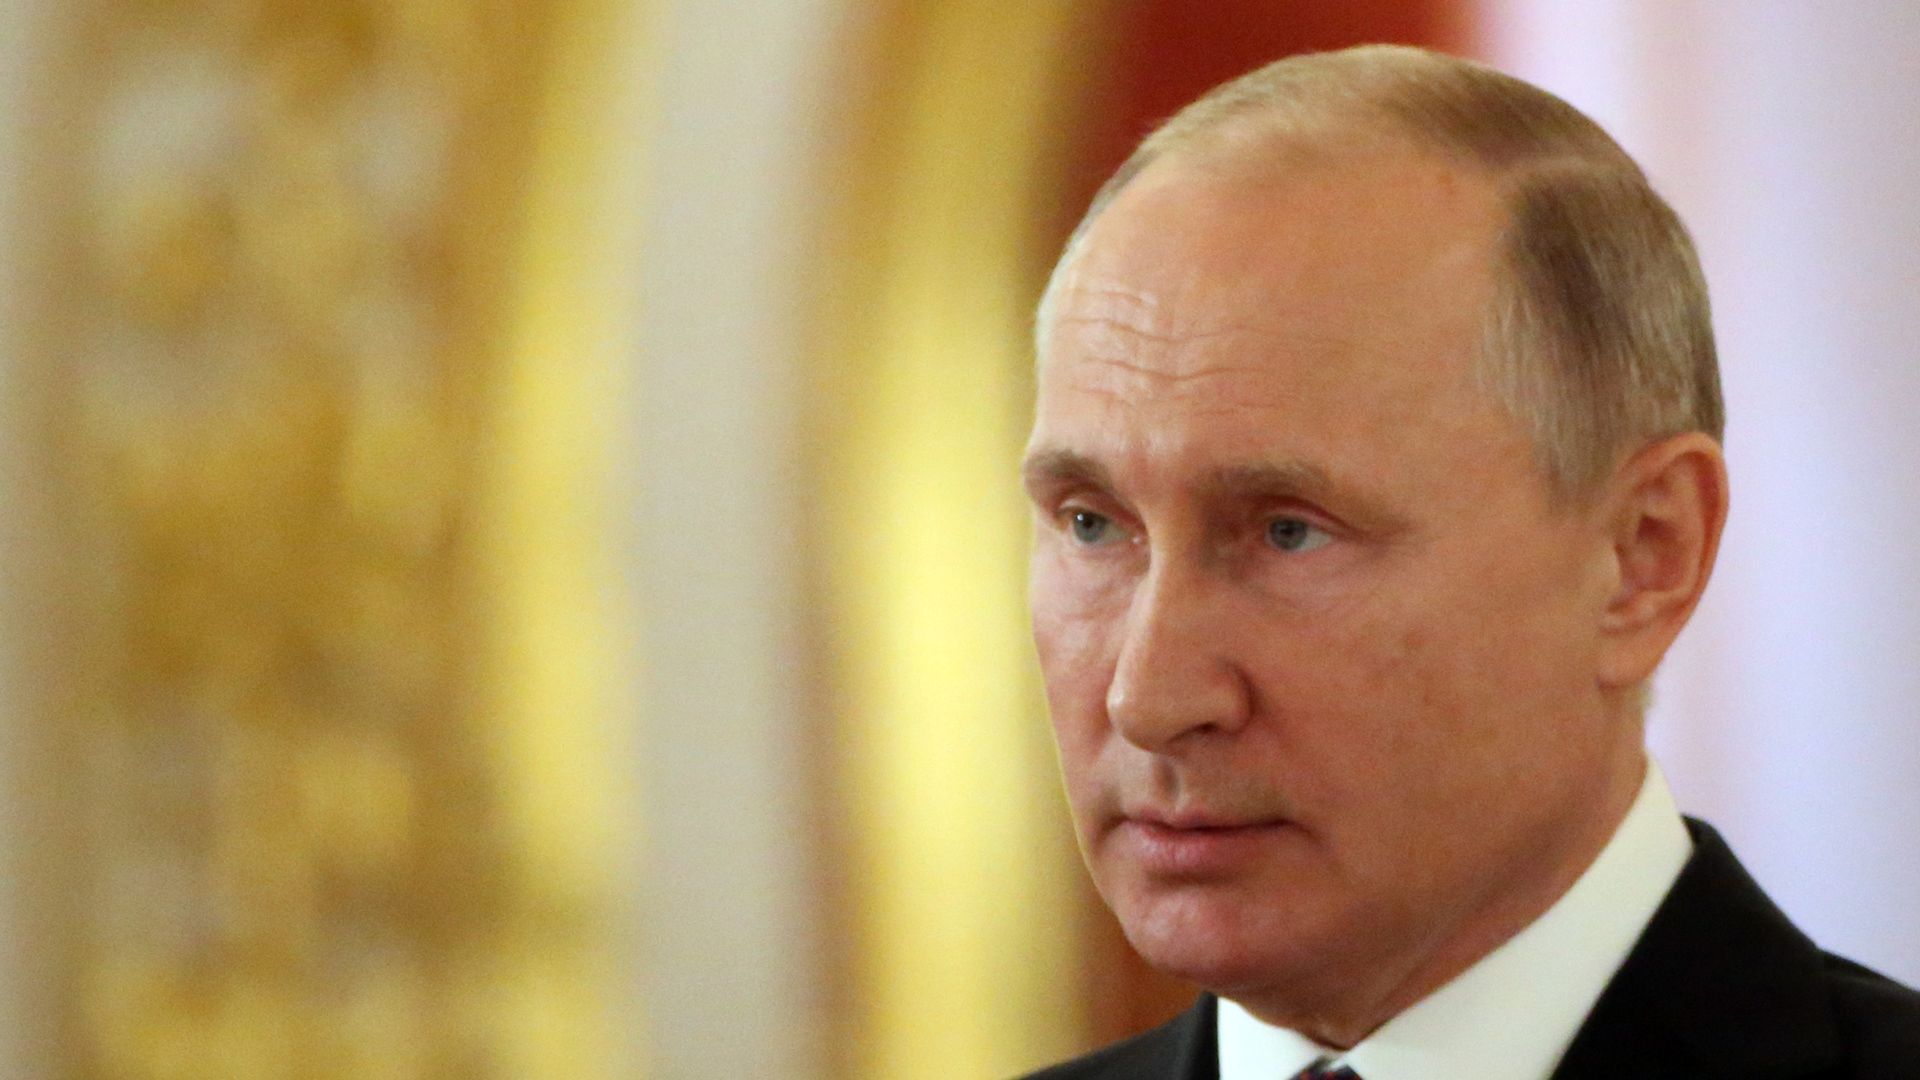 Vladimir Putin looks stoic before gold background.